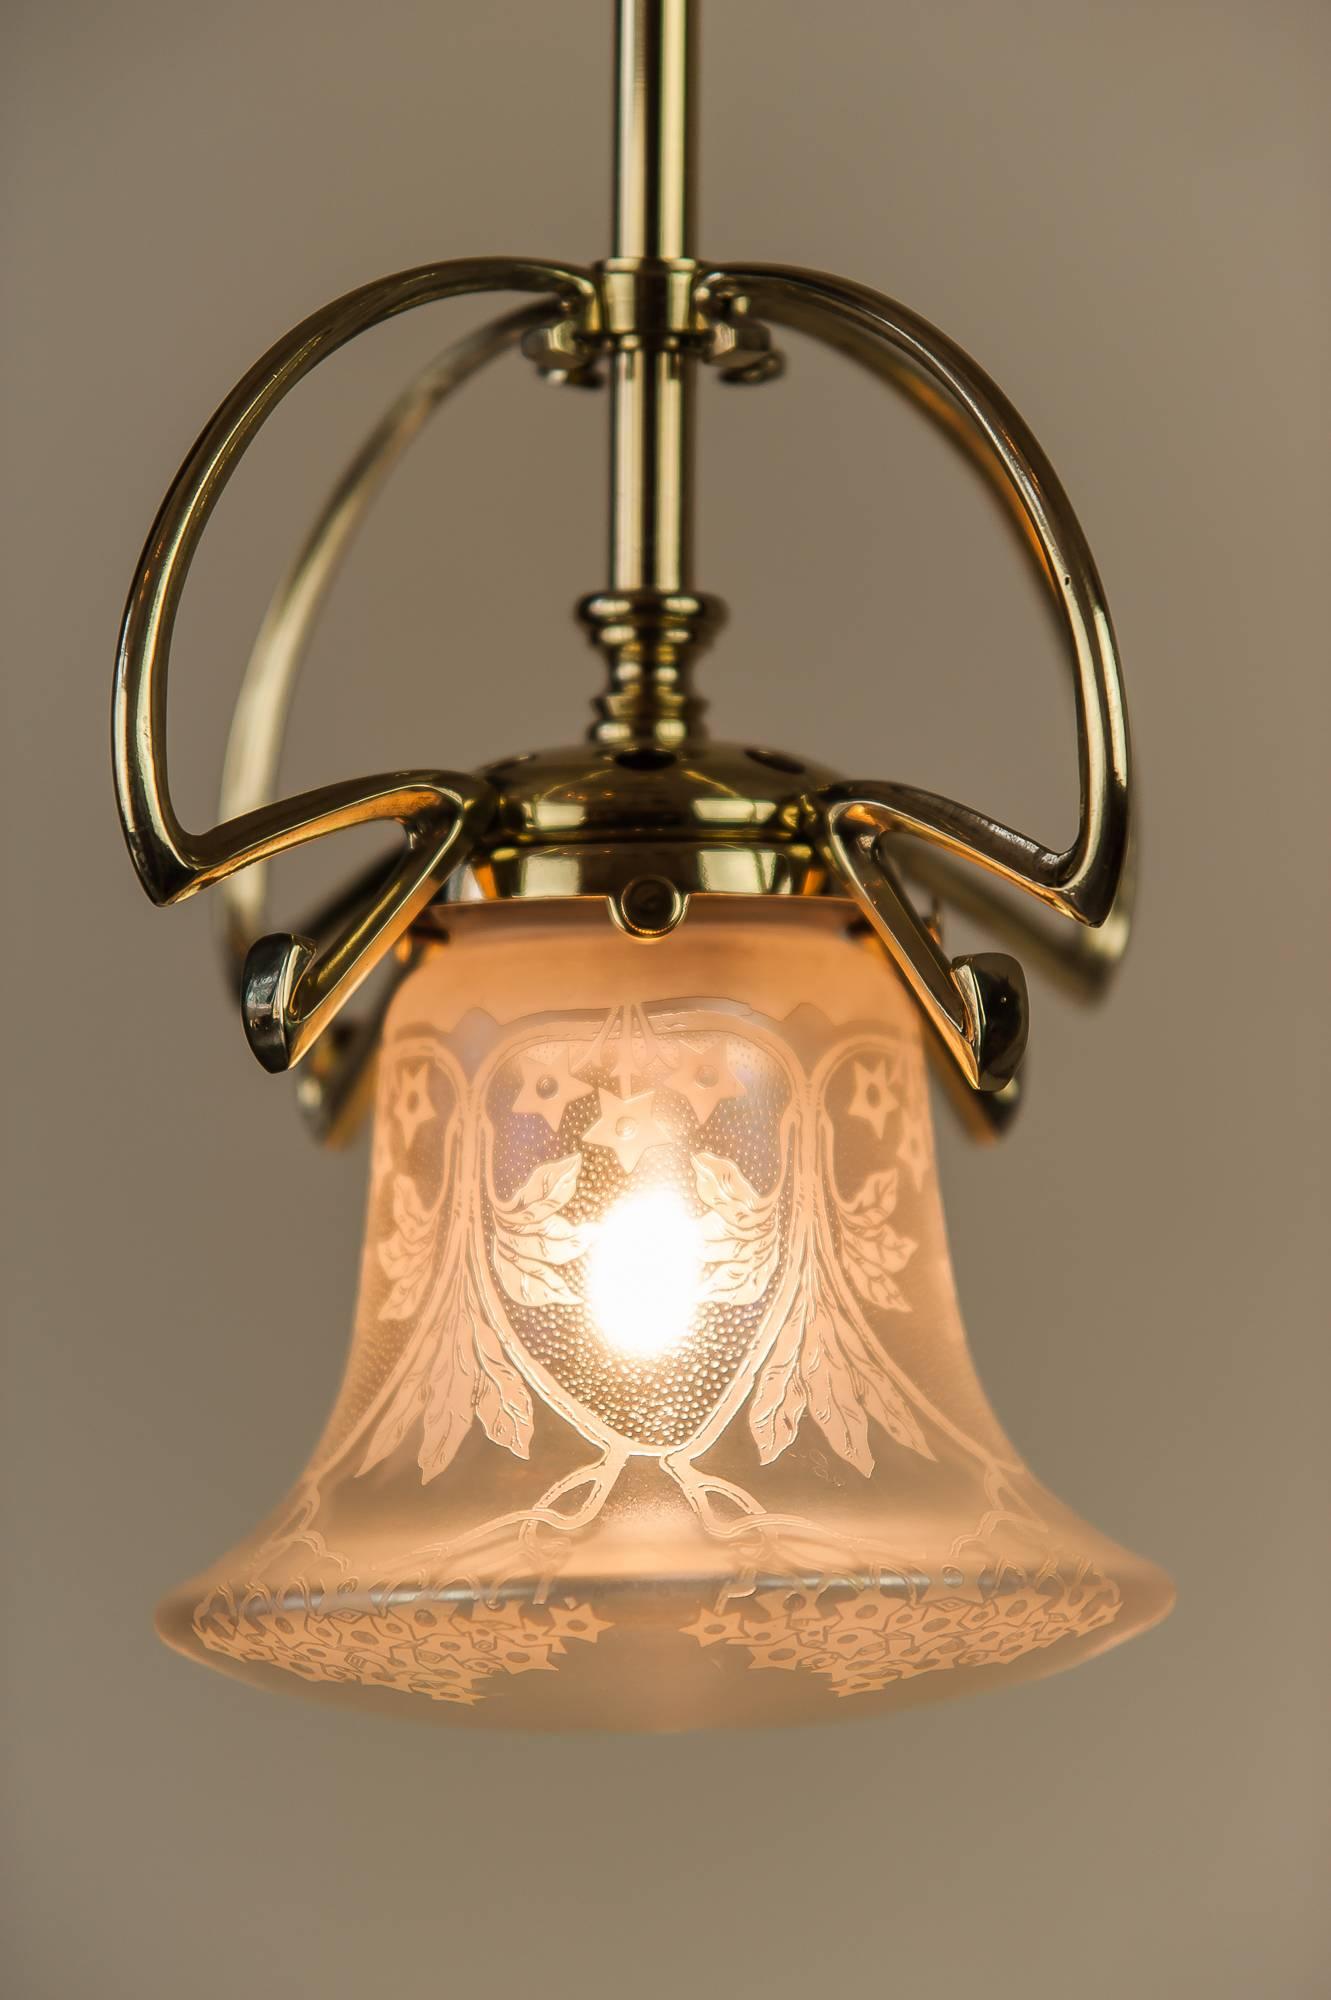 Jugendstil pendant circa 1908 with original glass shade
Polished and stove enamelled.
    